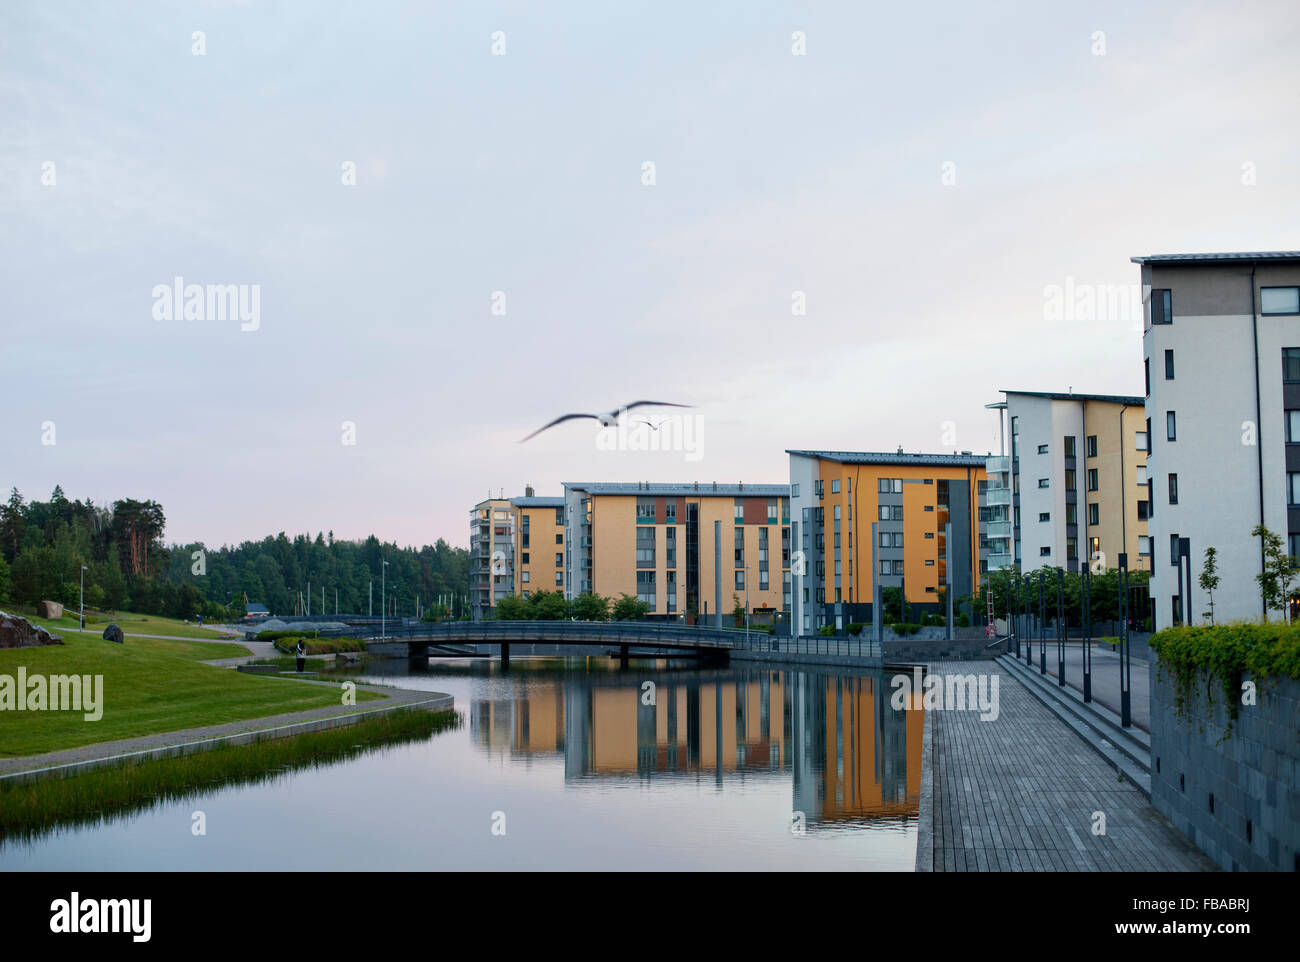 Finland, Uusimaa, Helsinki, Vuosaari, Flying birds against residential buildings along canal at dusk Stock Photo